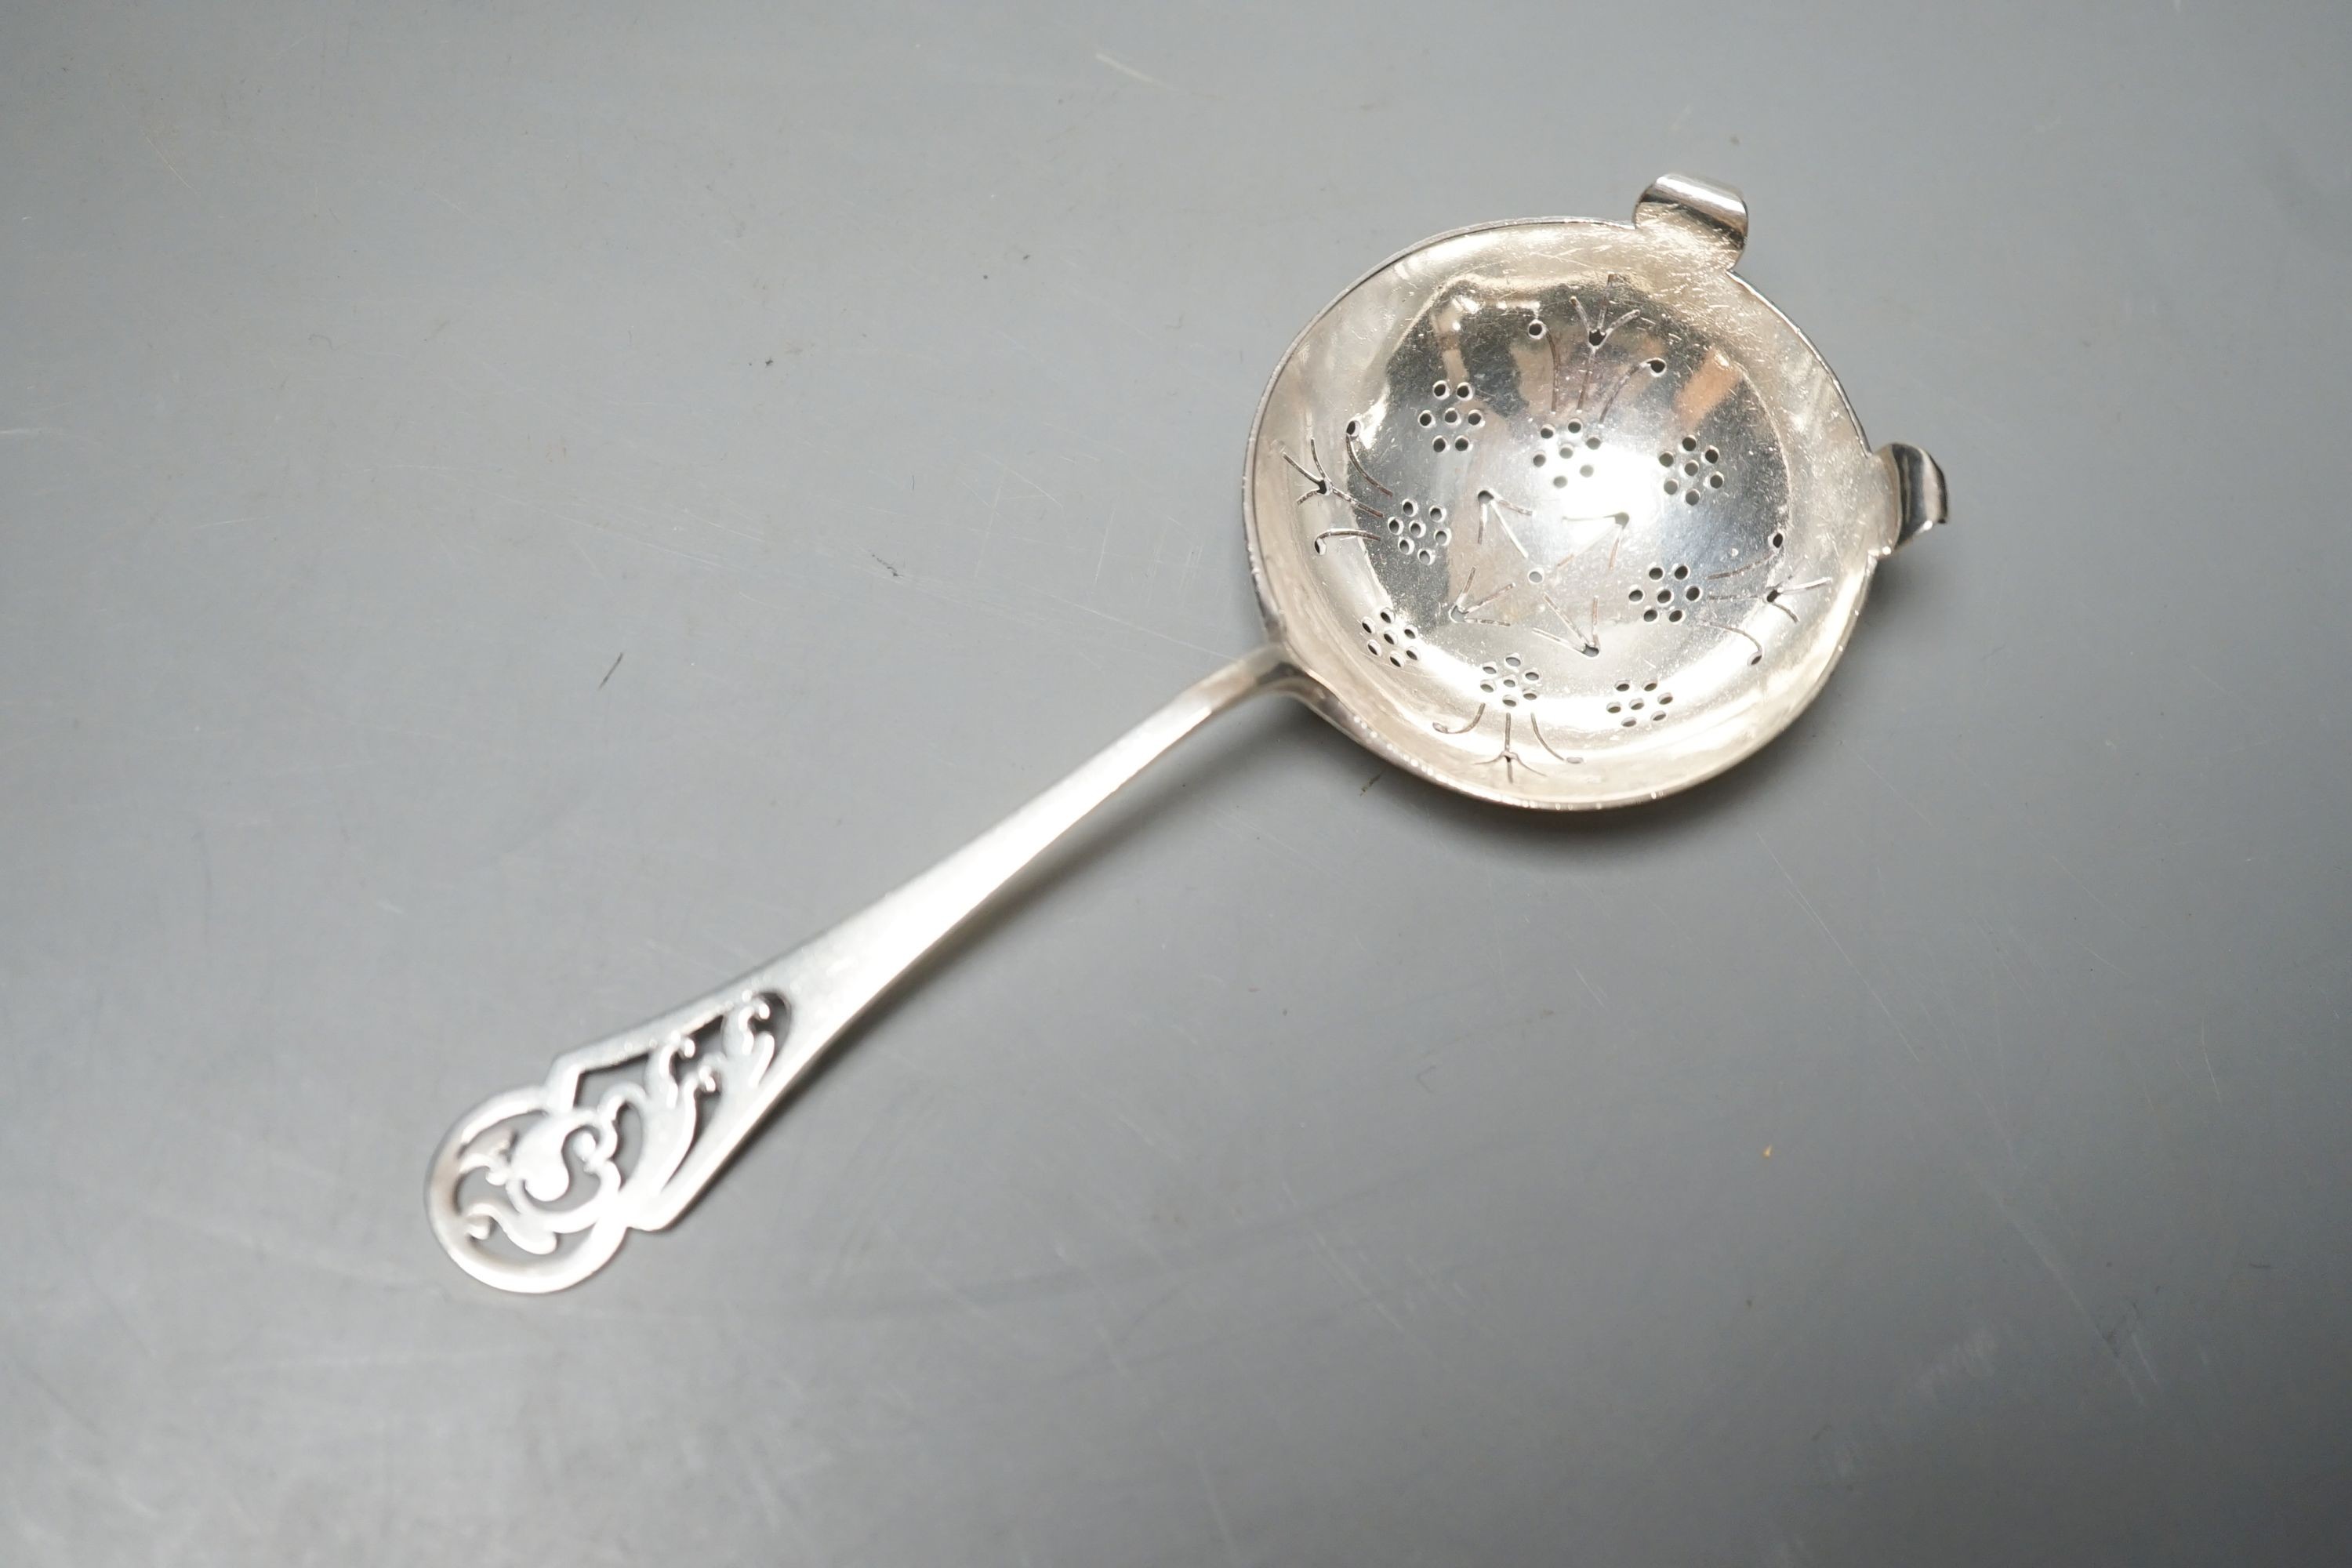 A Edwardian Art Nouveau pierced silver comport, William Hutton & Sons, London, 1903, 15.7cm diameter and a silver sifter spoon, 6.5oz.